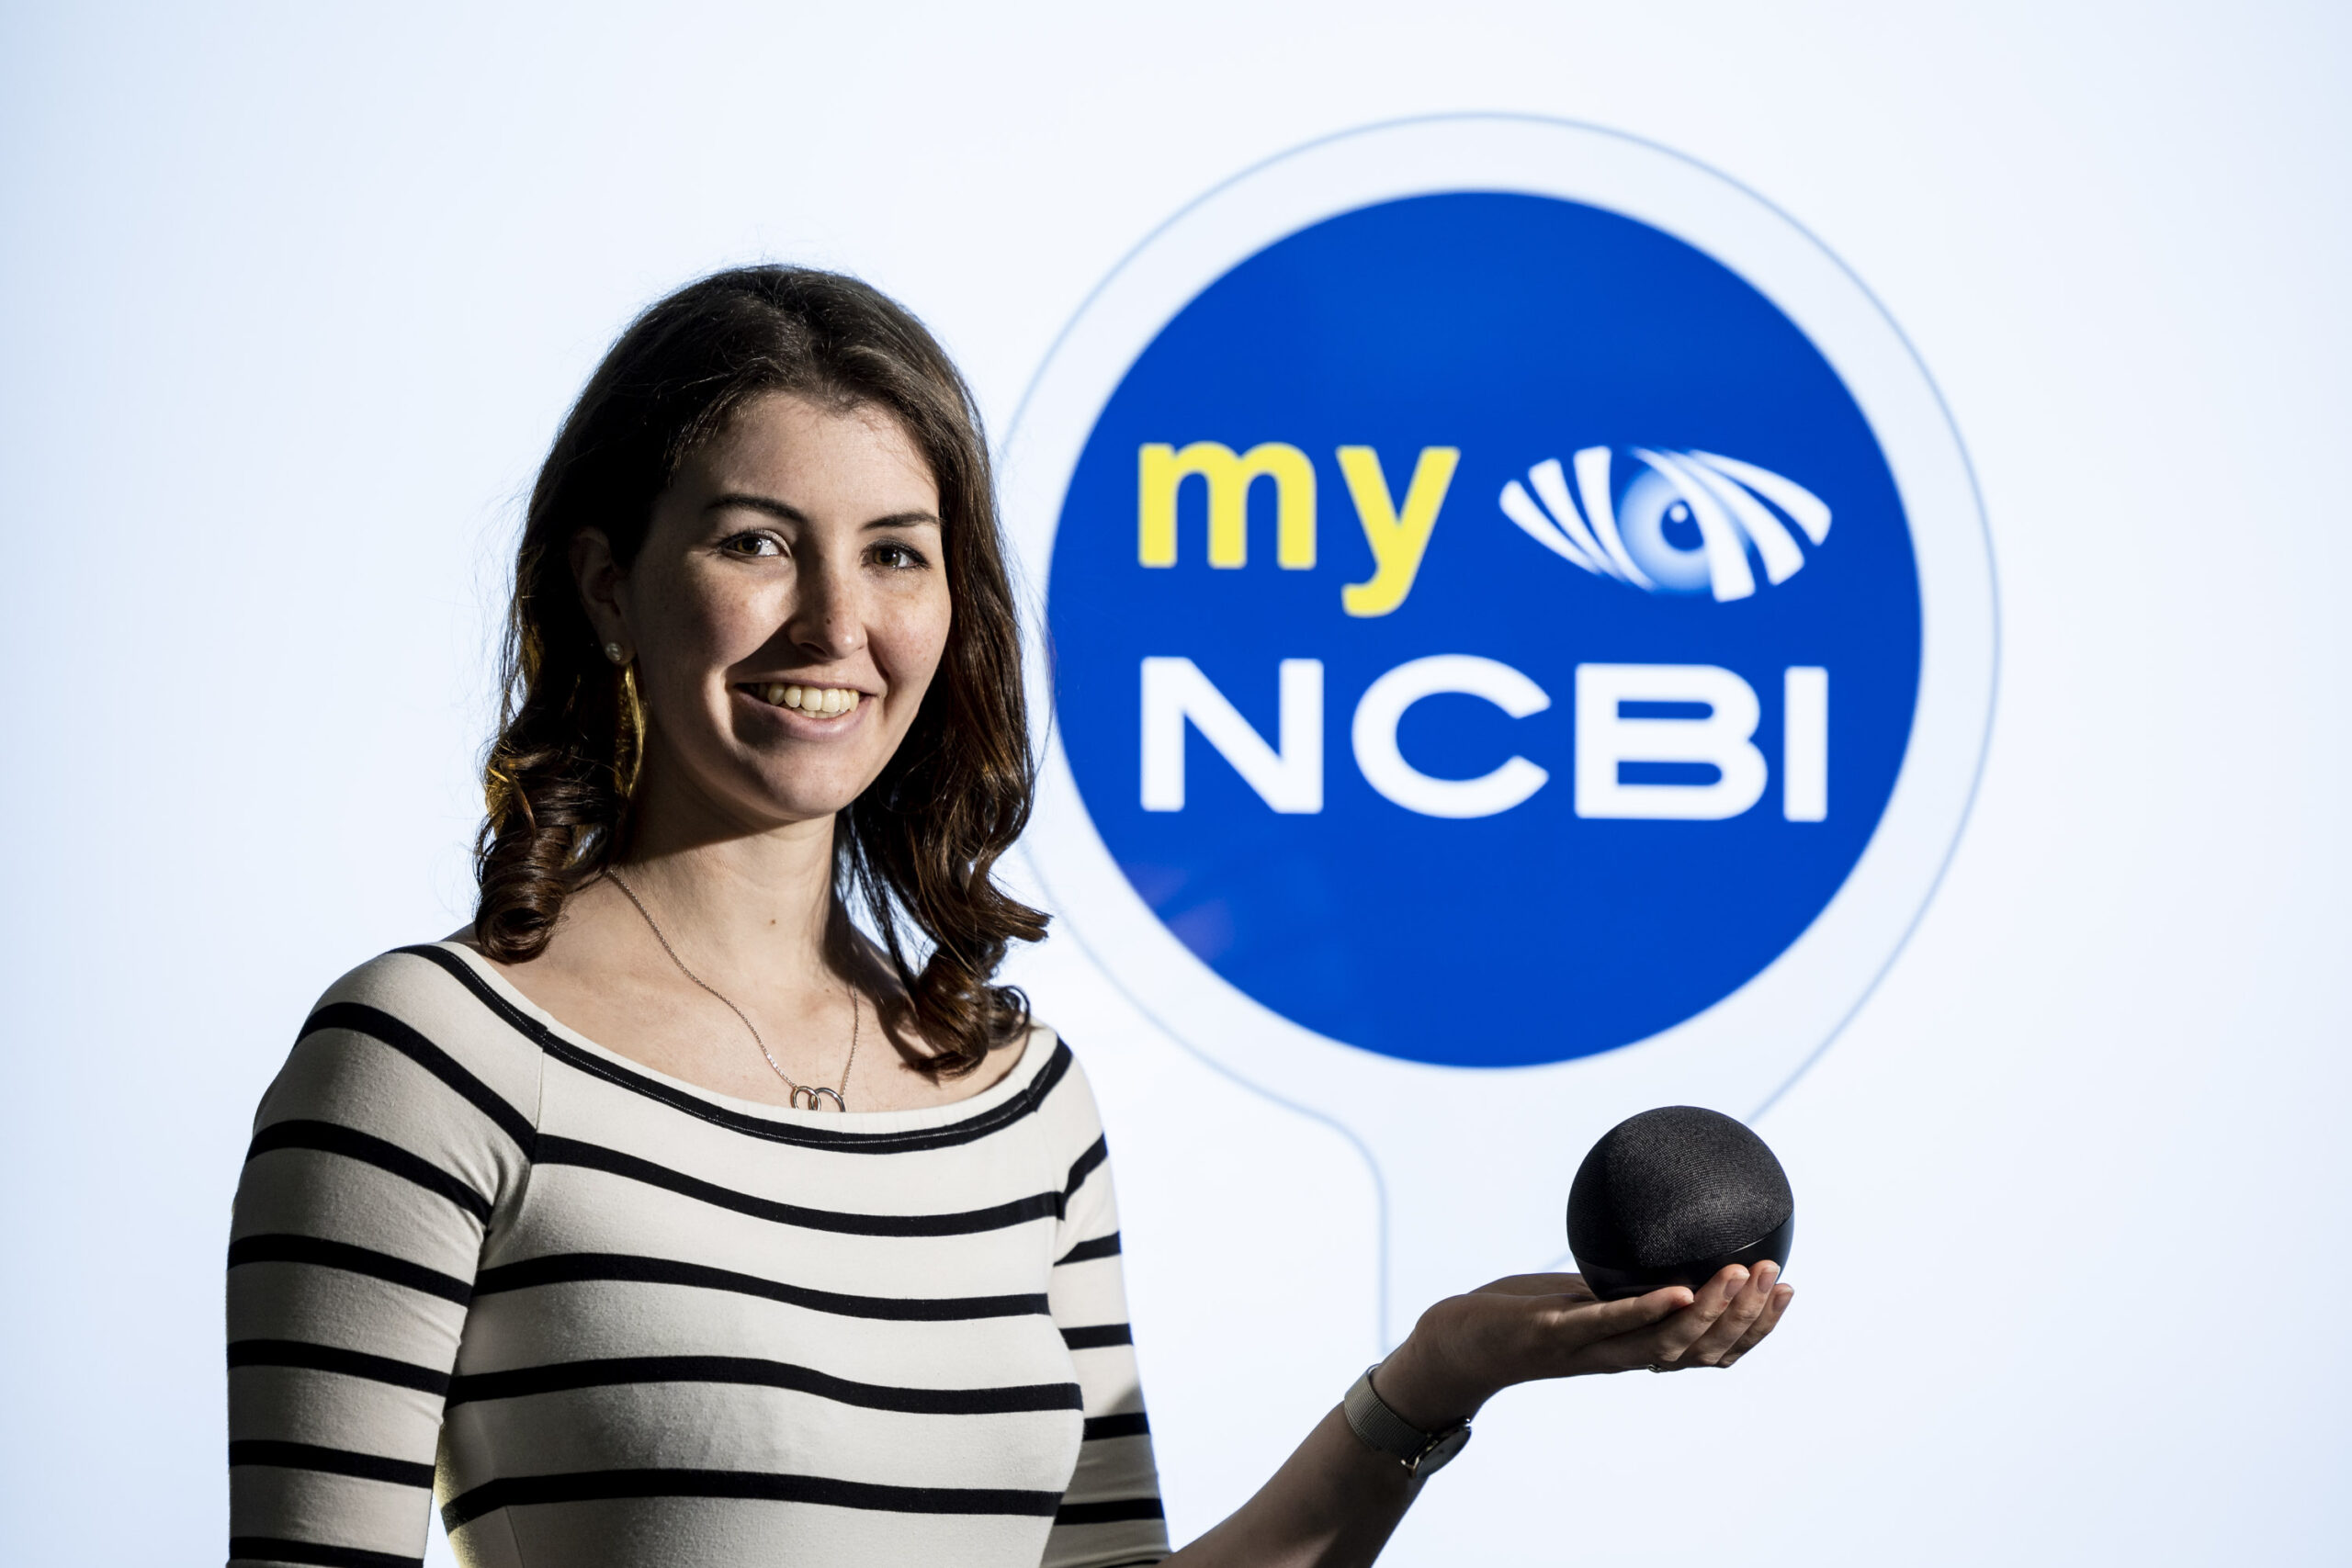 NCBI service user Aine Sullivan holding an Alexa device in front of the myNCBI Smart Hub logo